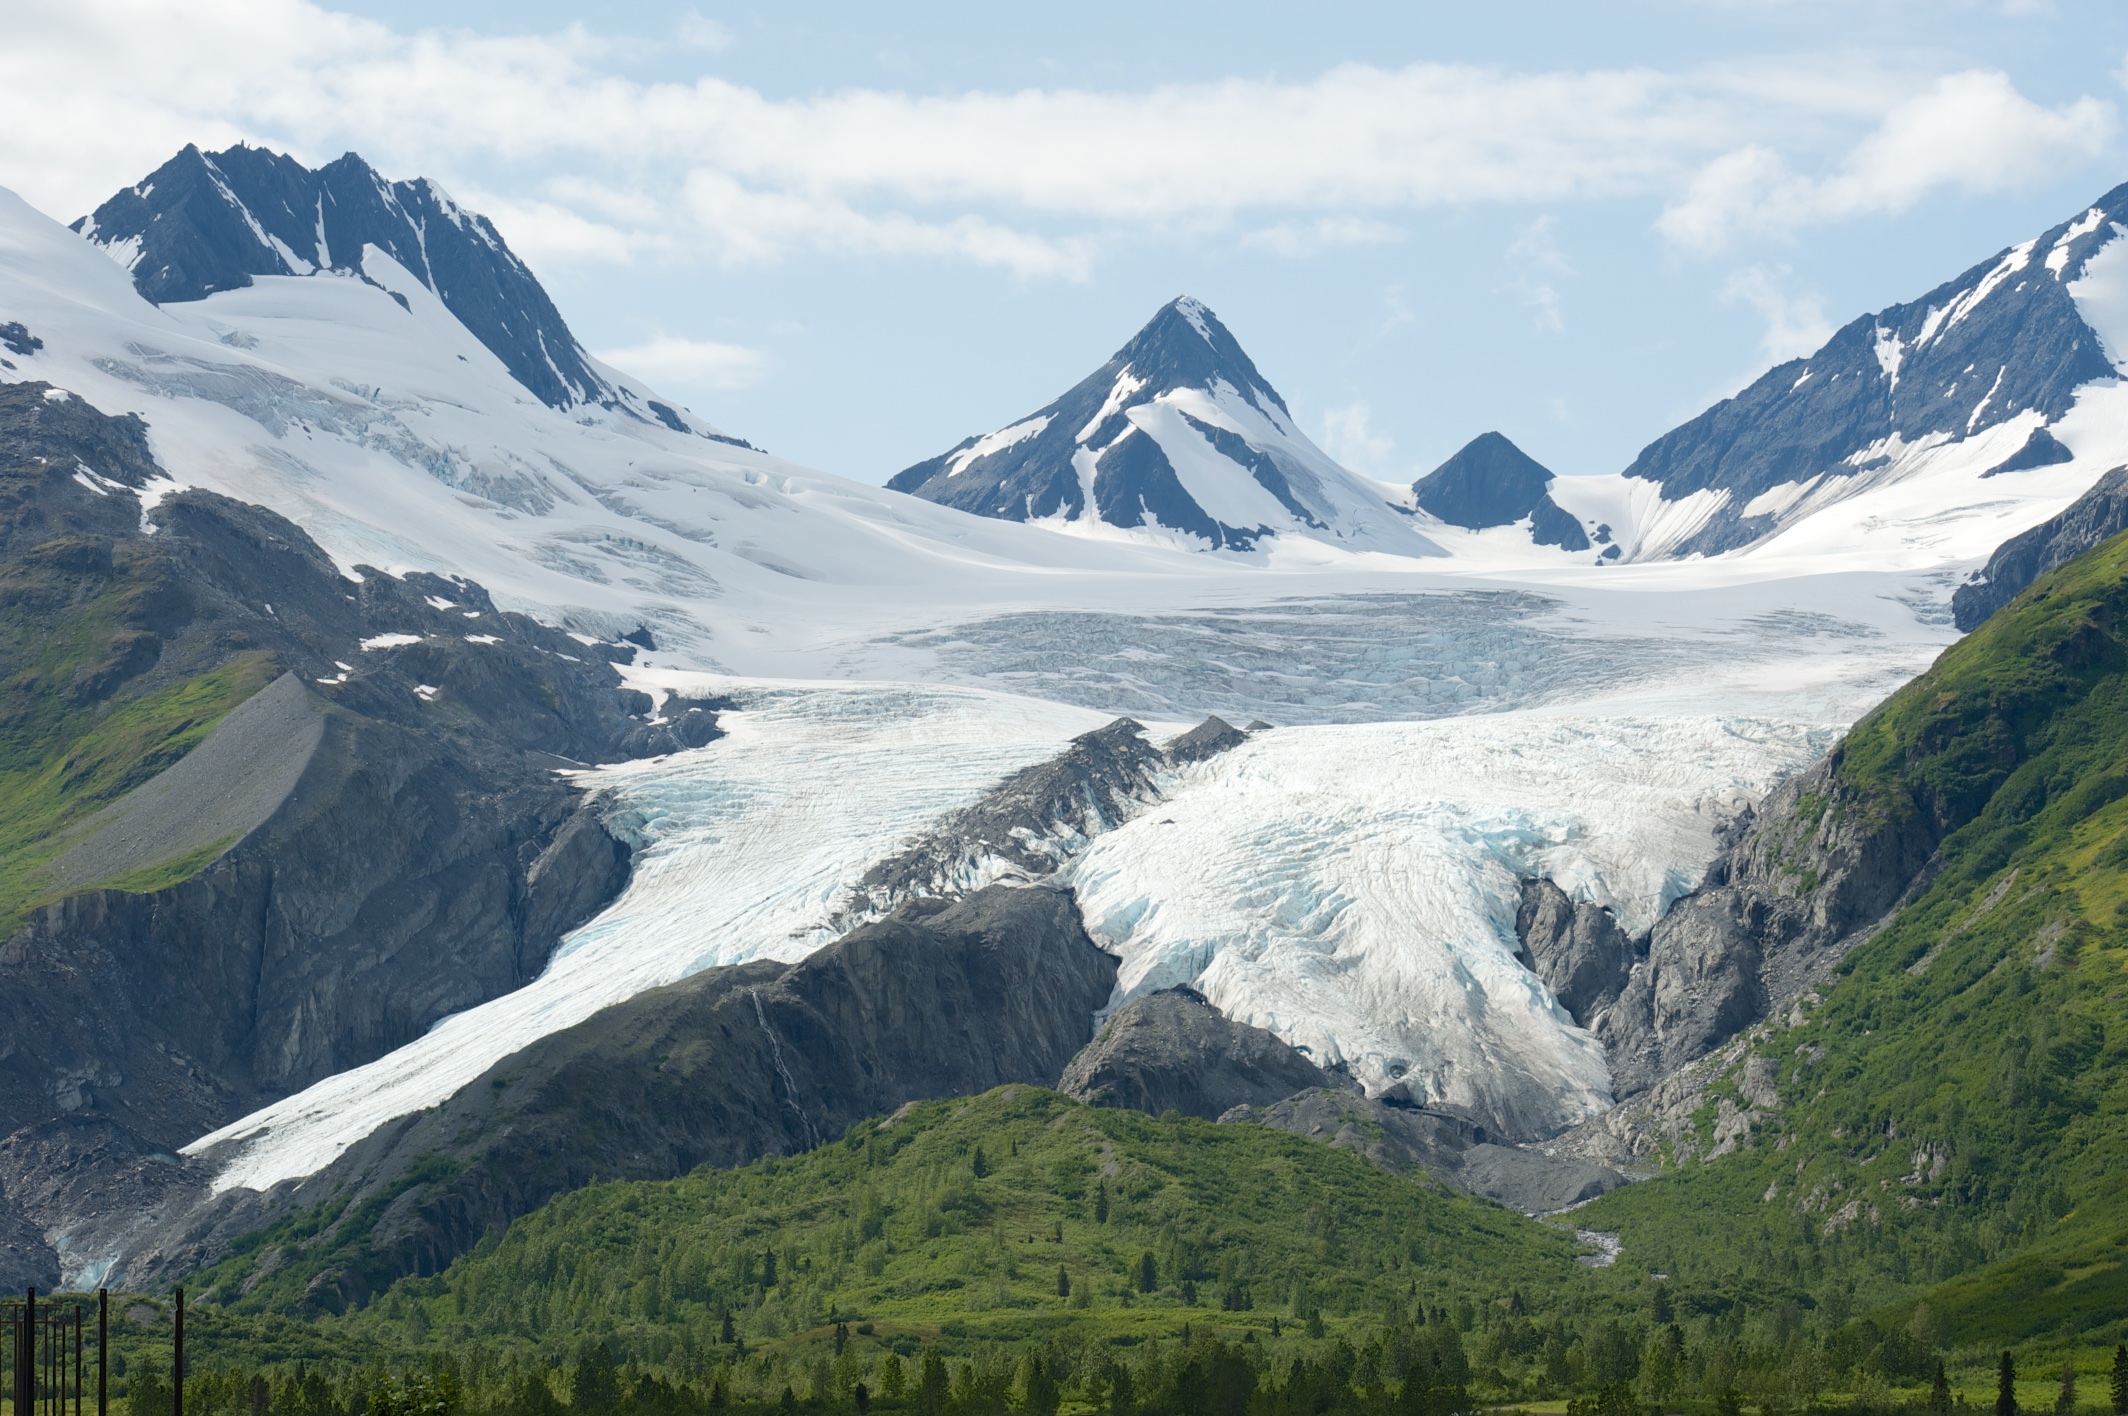  Worthington Glacier from road, near Valdez, Alaska 